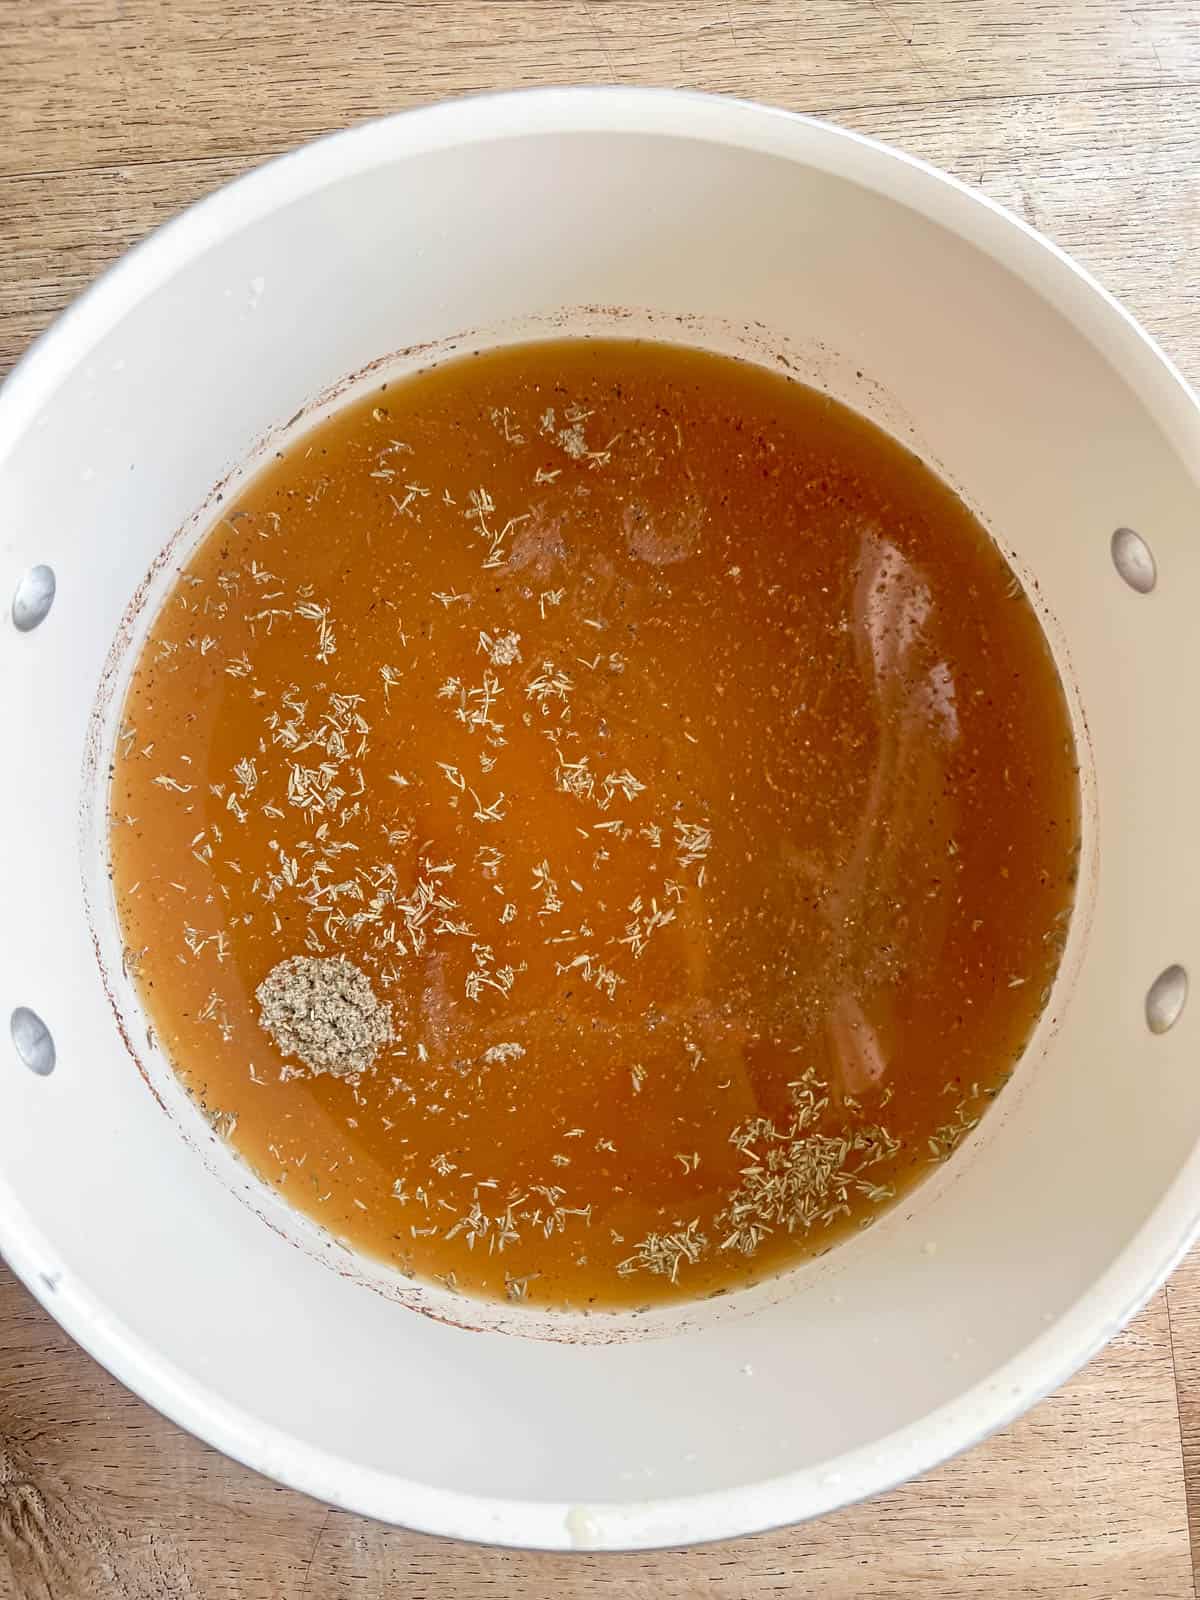 Bone broth in a soup pan.